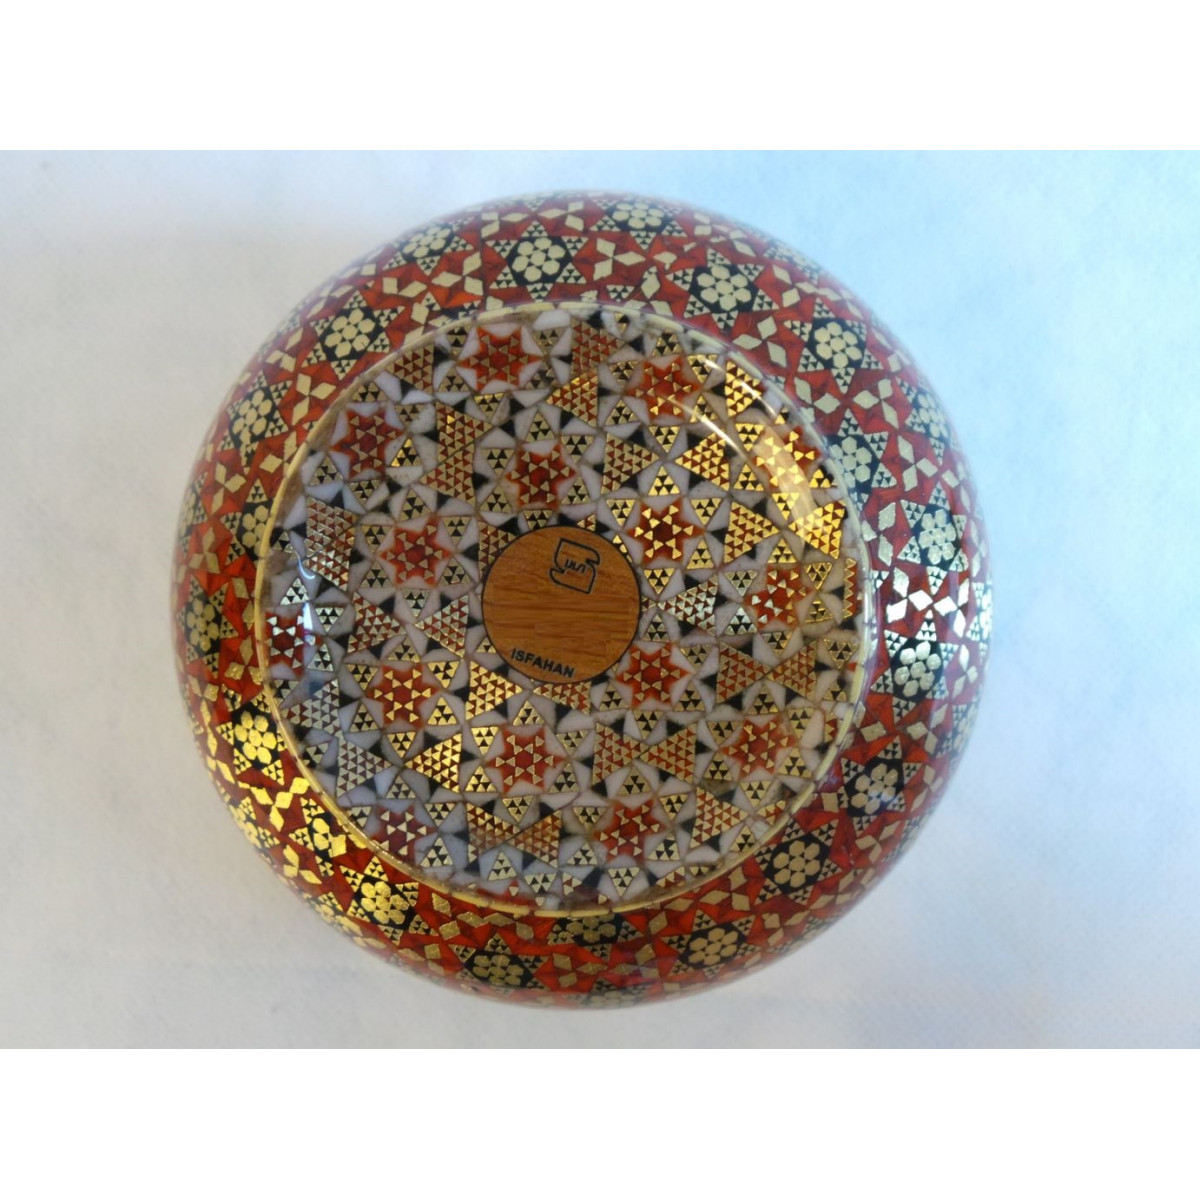 Khatam on Copper Sugar/Candy Bowl Dish - HKH3005-Persian Handicrafts